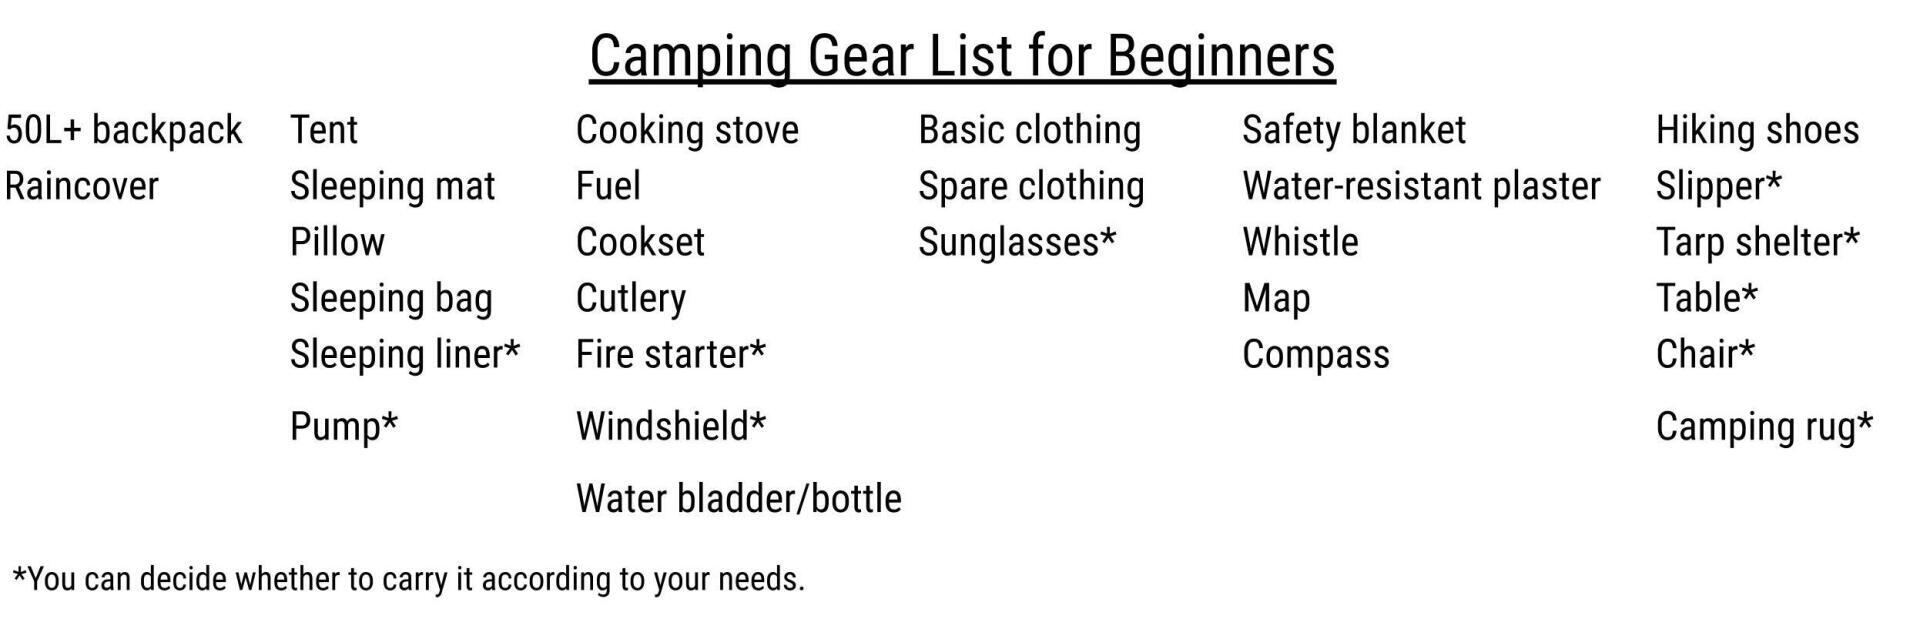 Camping gear list